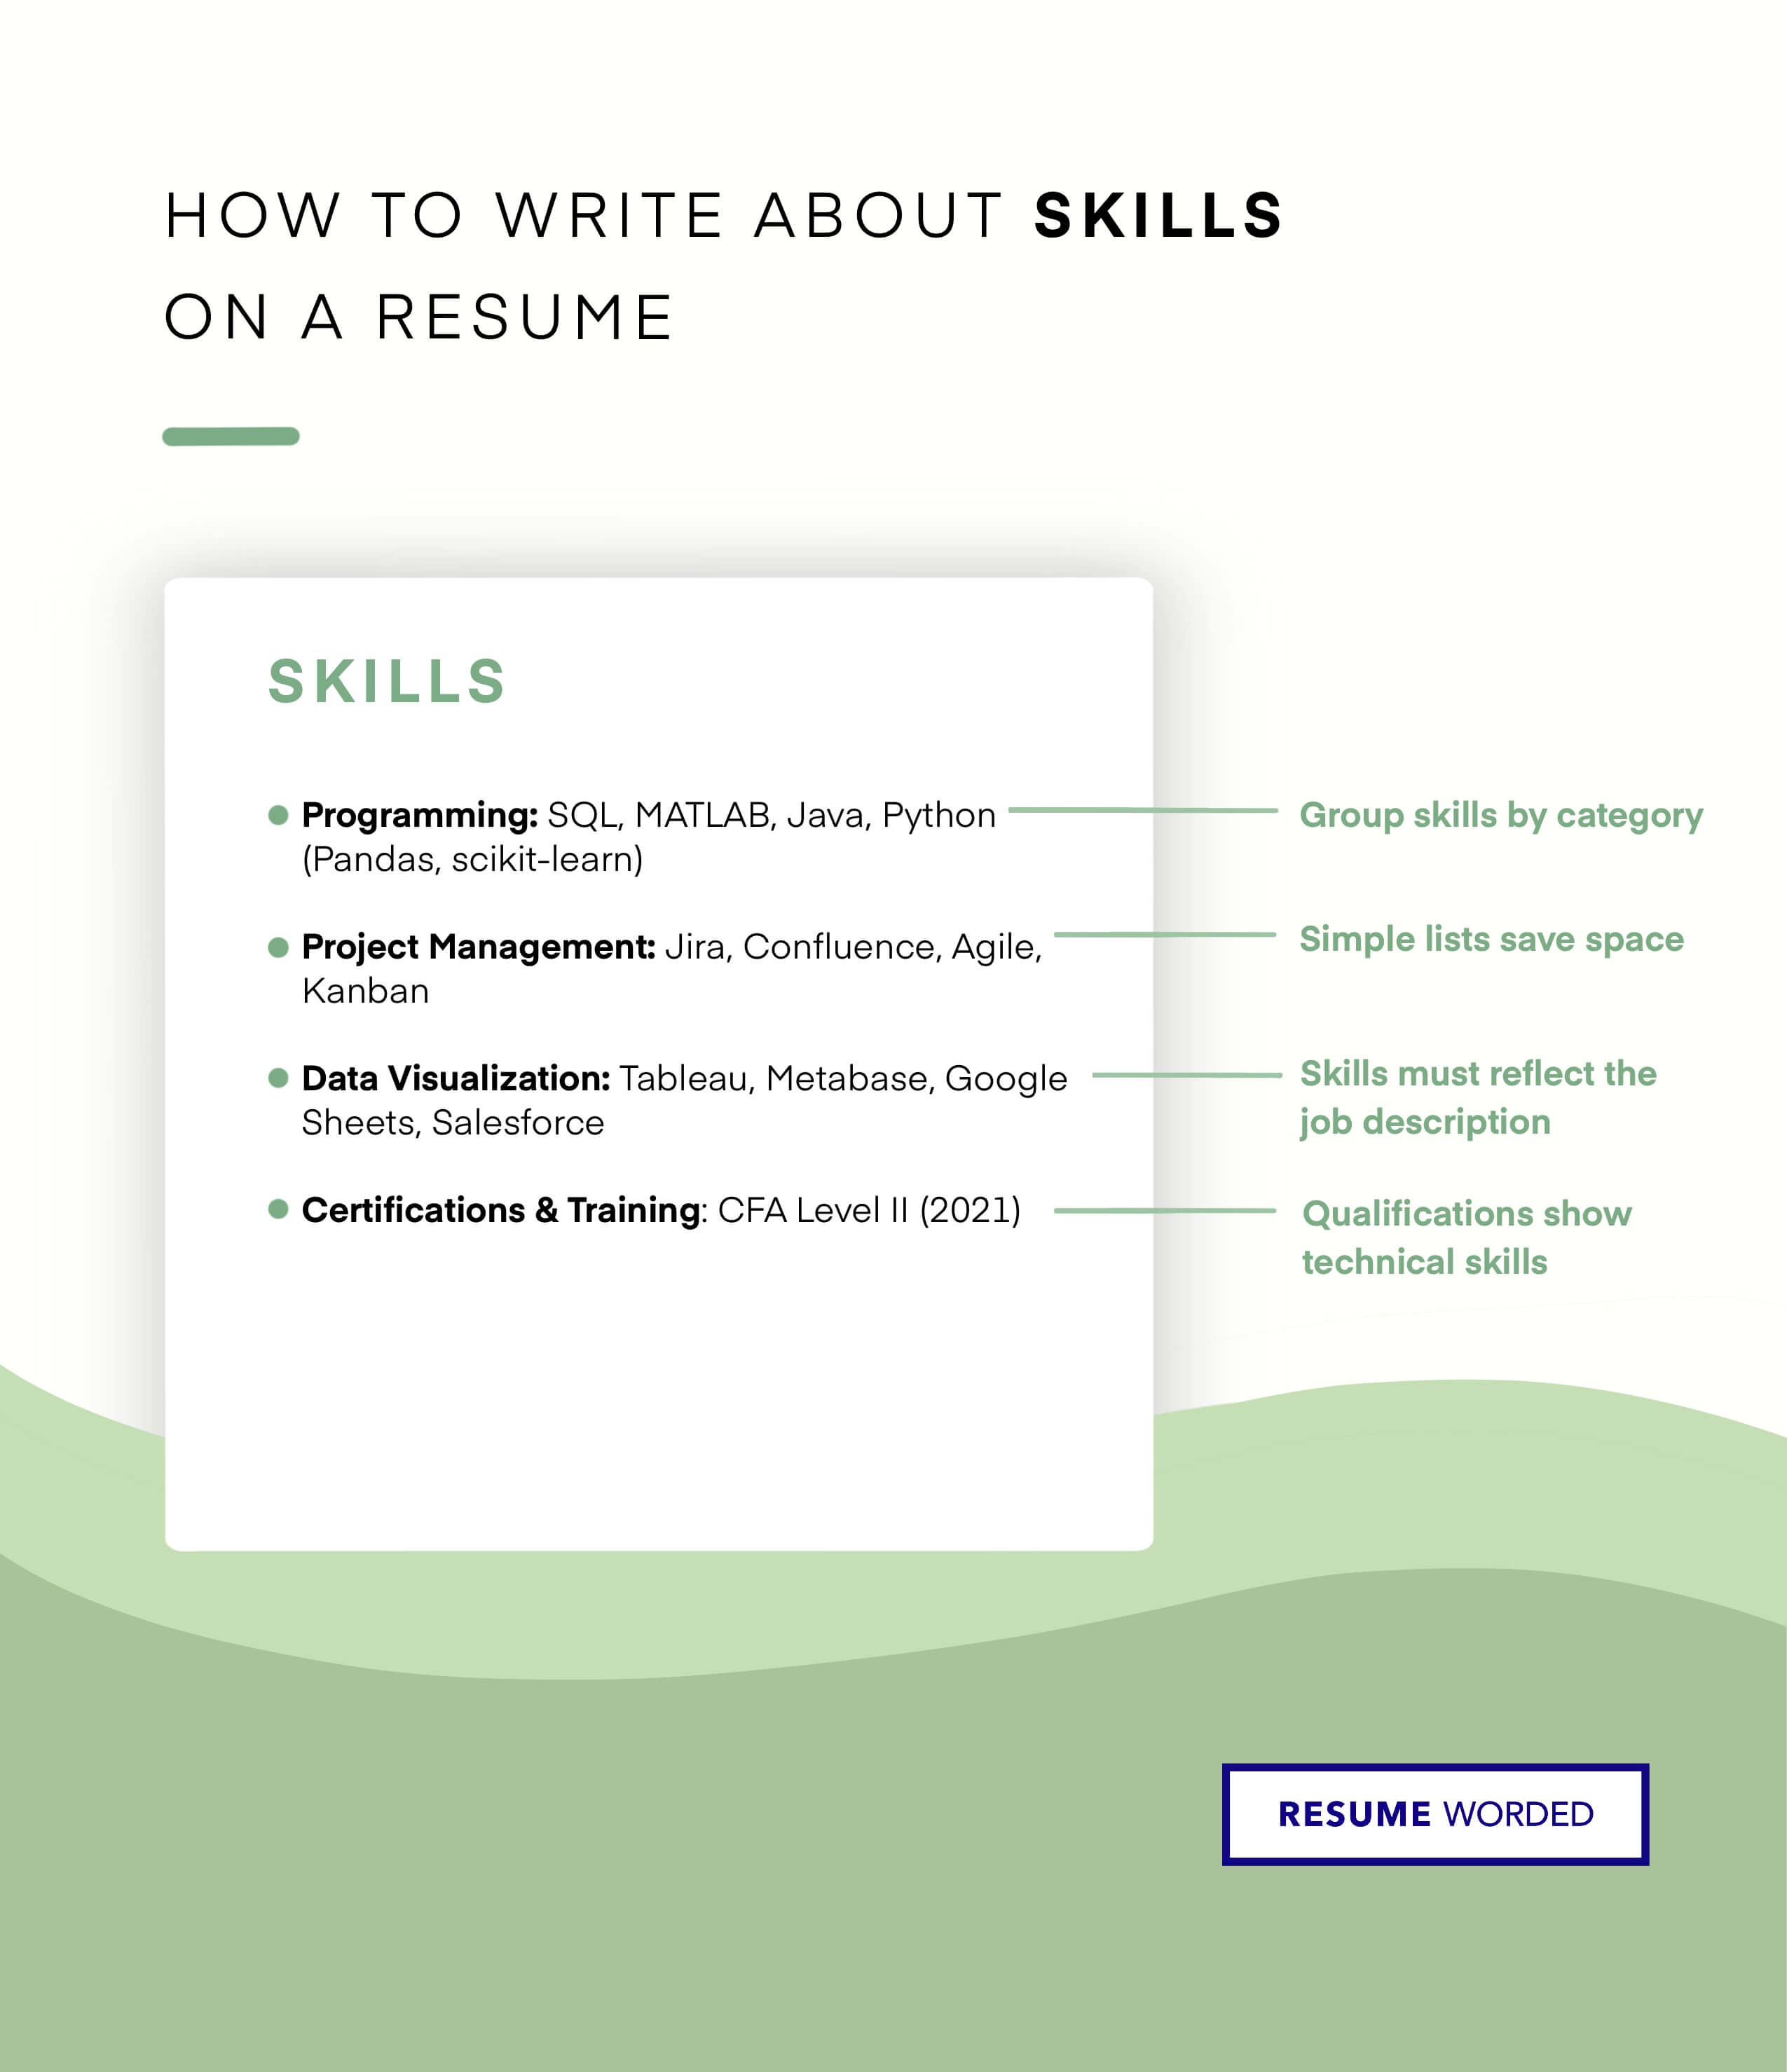 Showcase your digital skills - Entry Level Communications CV